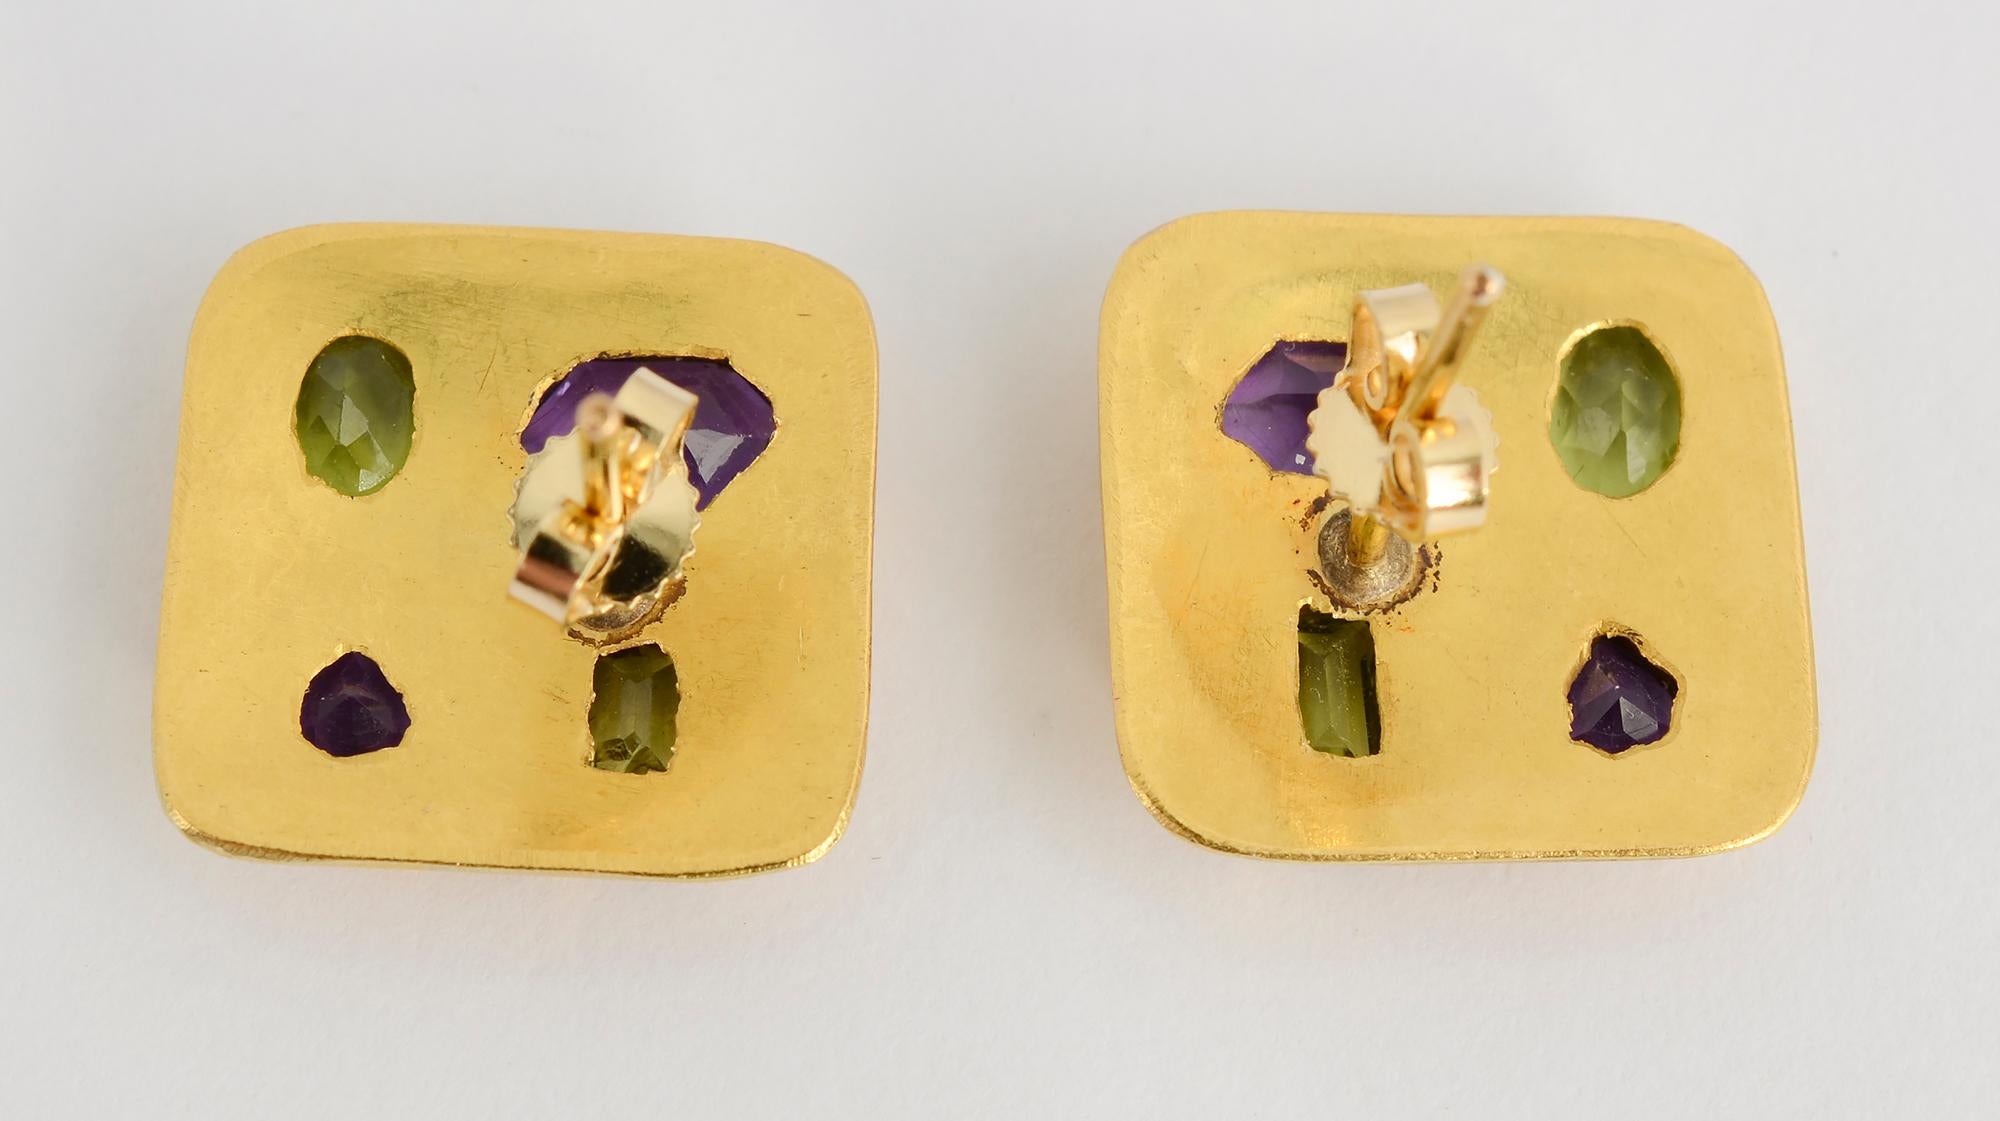 amethyst and peridot earrings